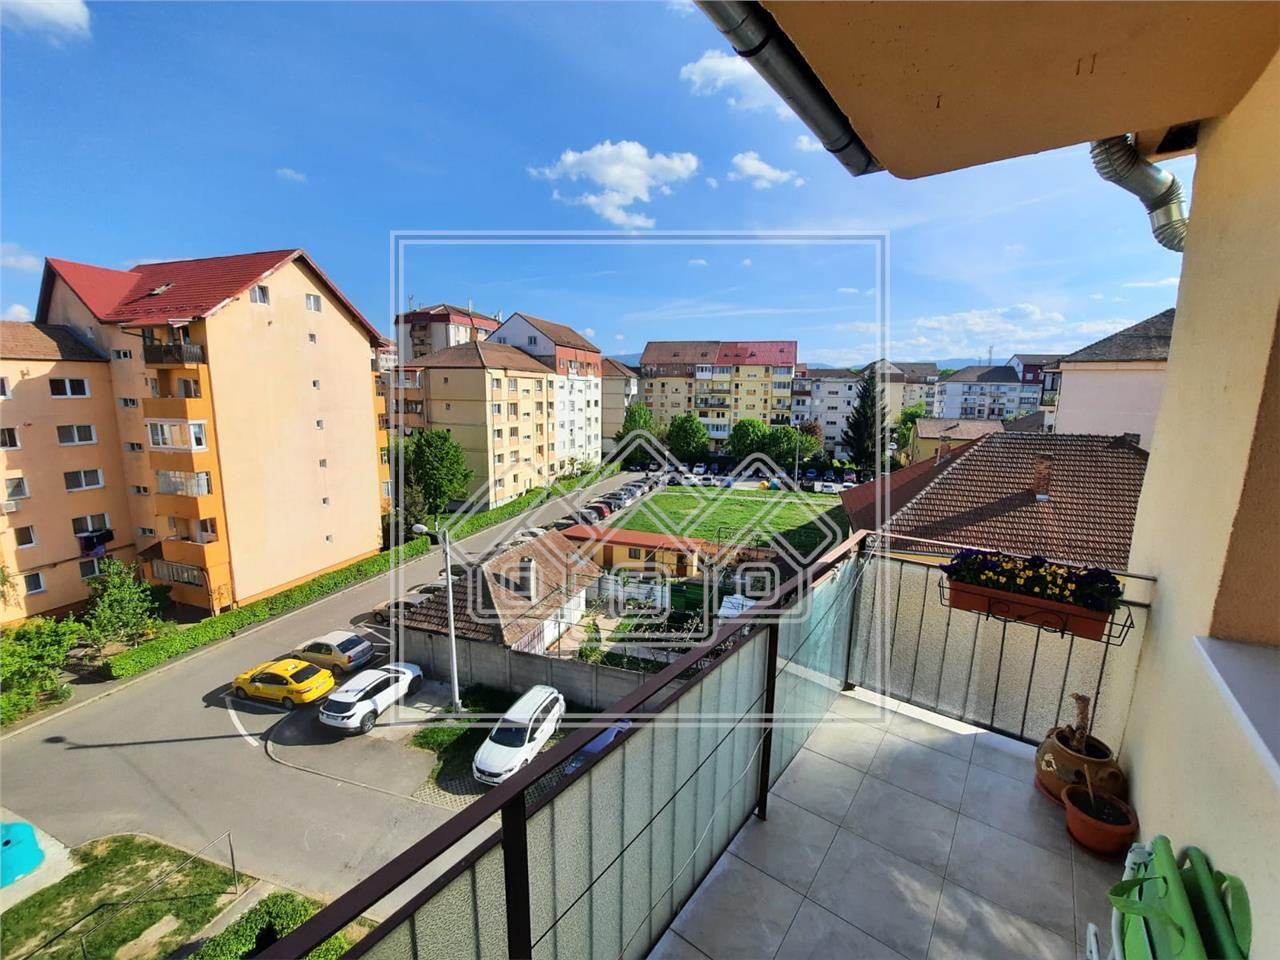 Apartament de vanzare in Sibiu - 3 camere, 2 balcoane - Valea Aurie